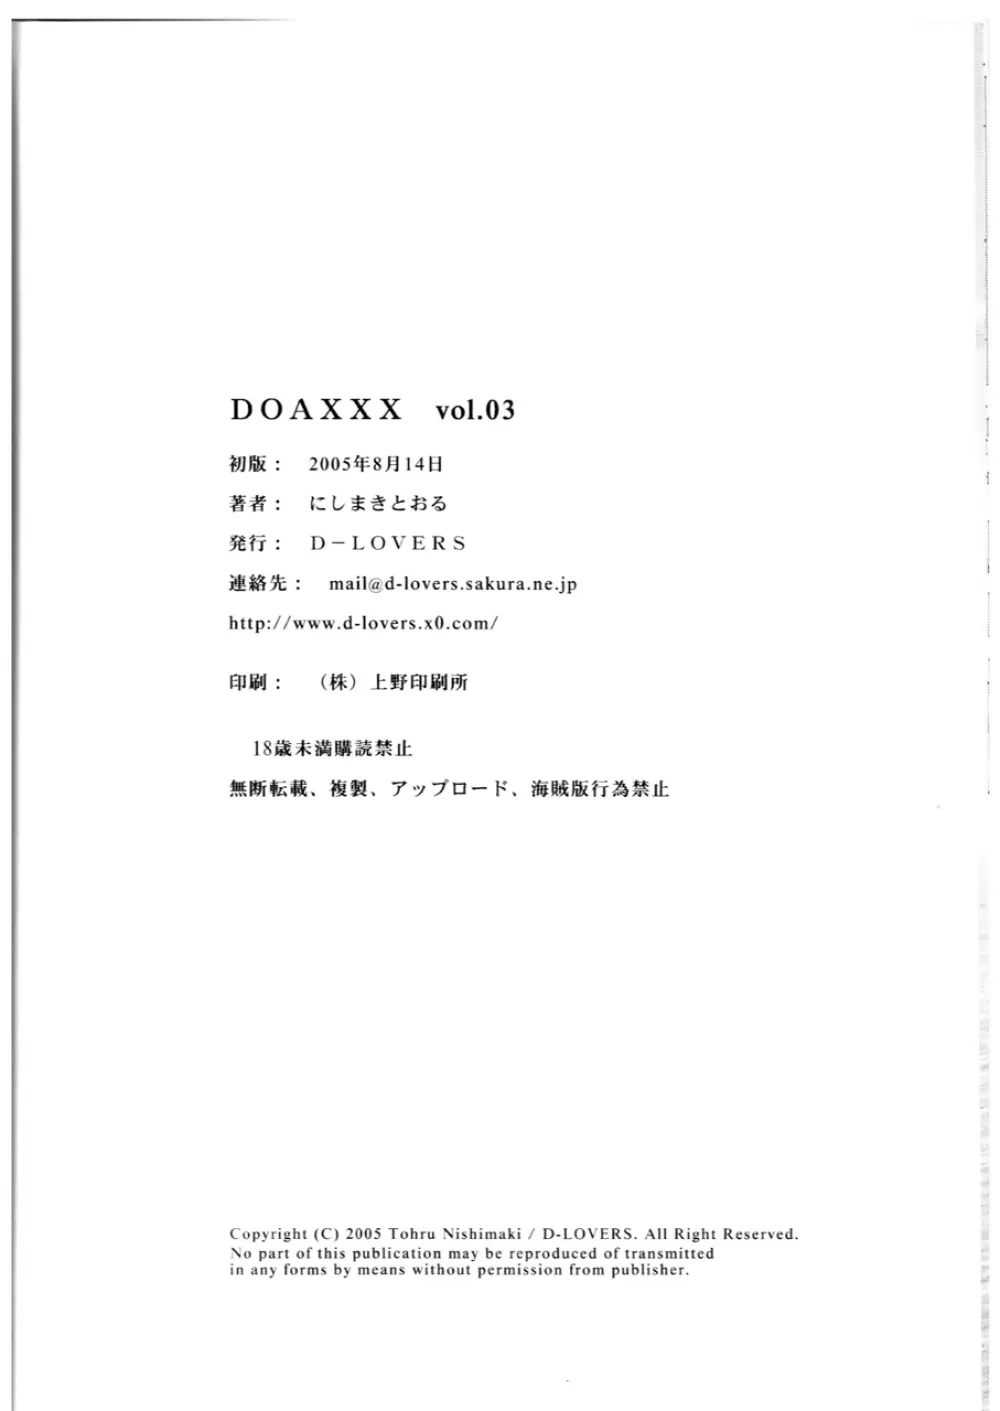 DOA XXX VOL. 03 - page23